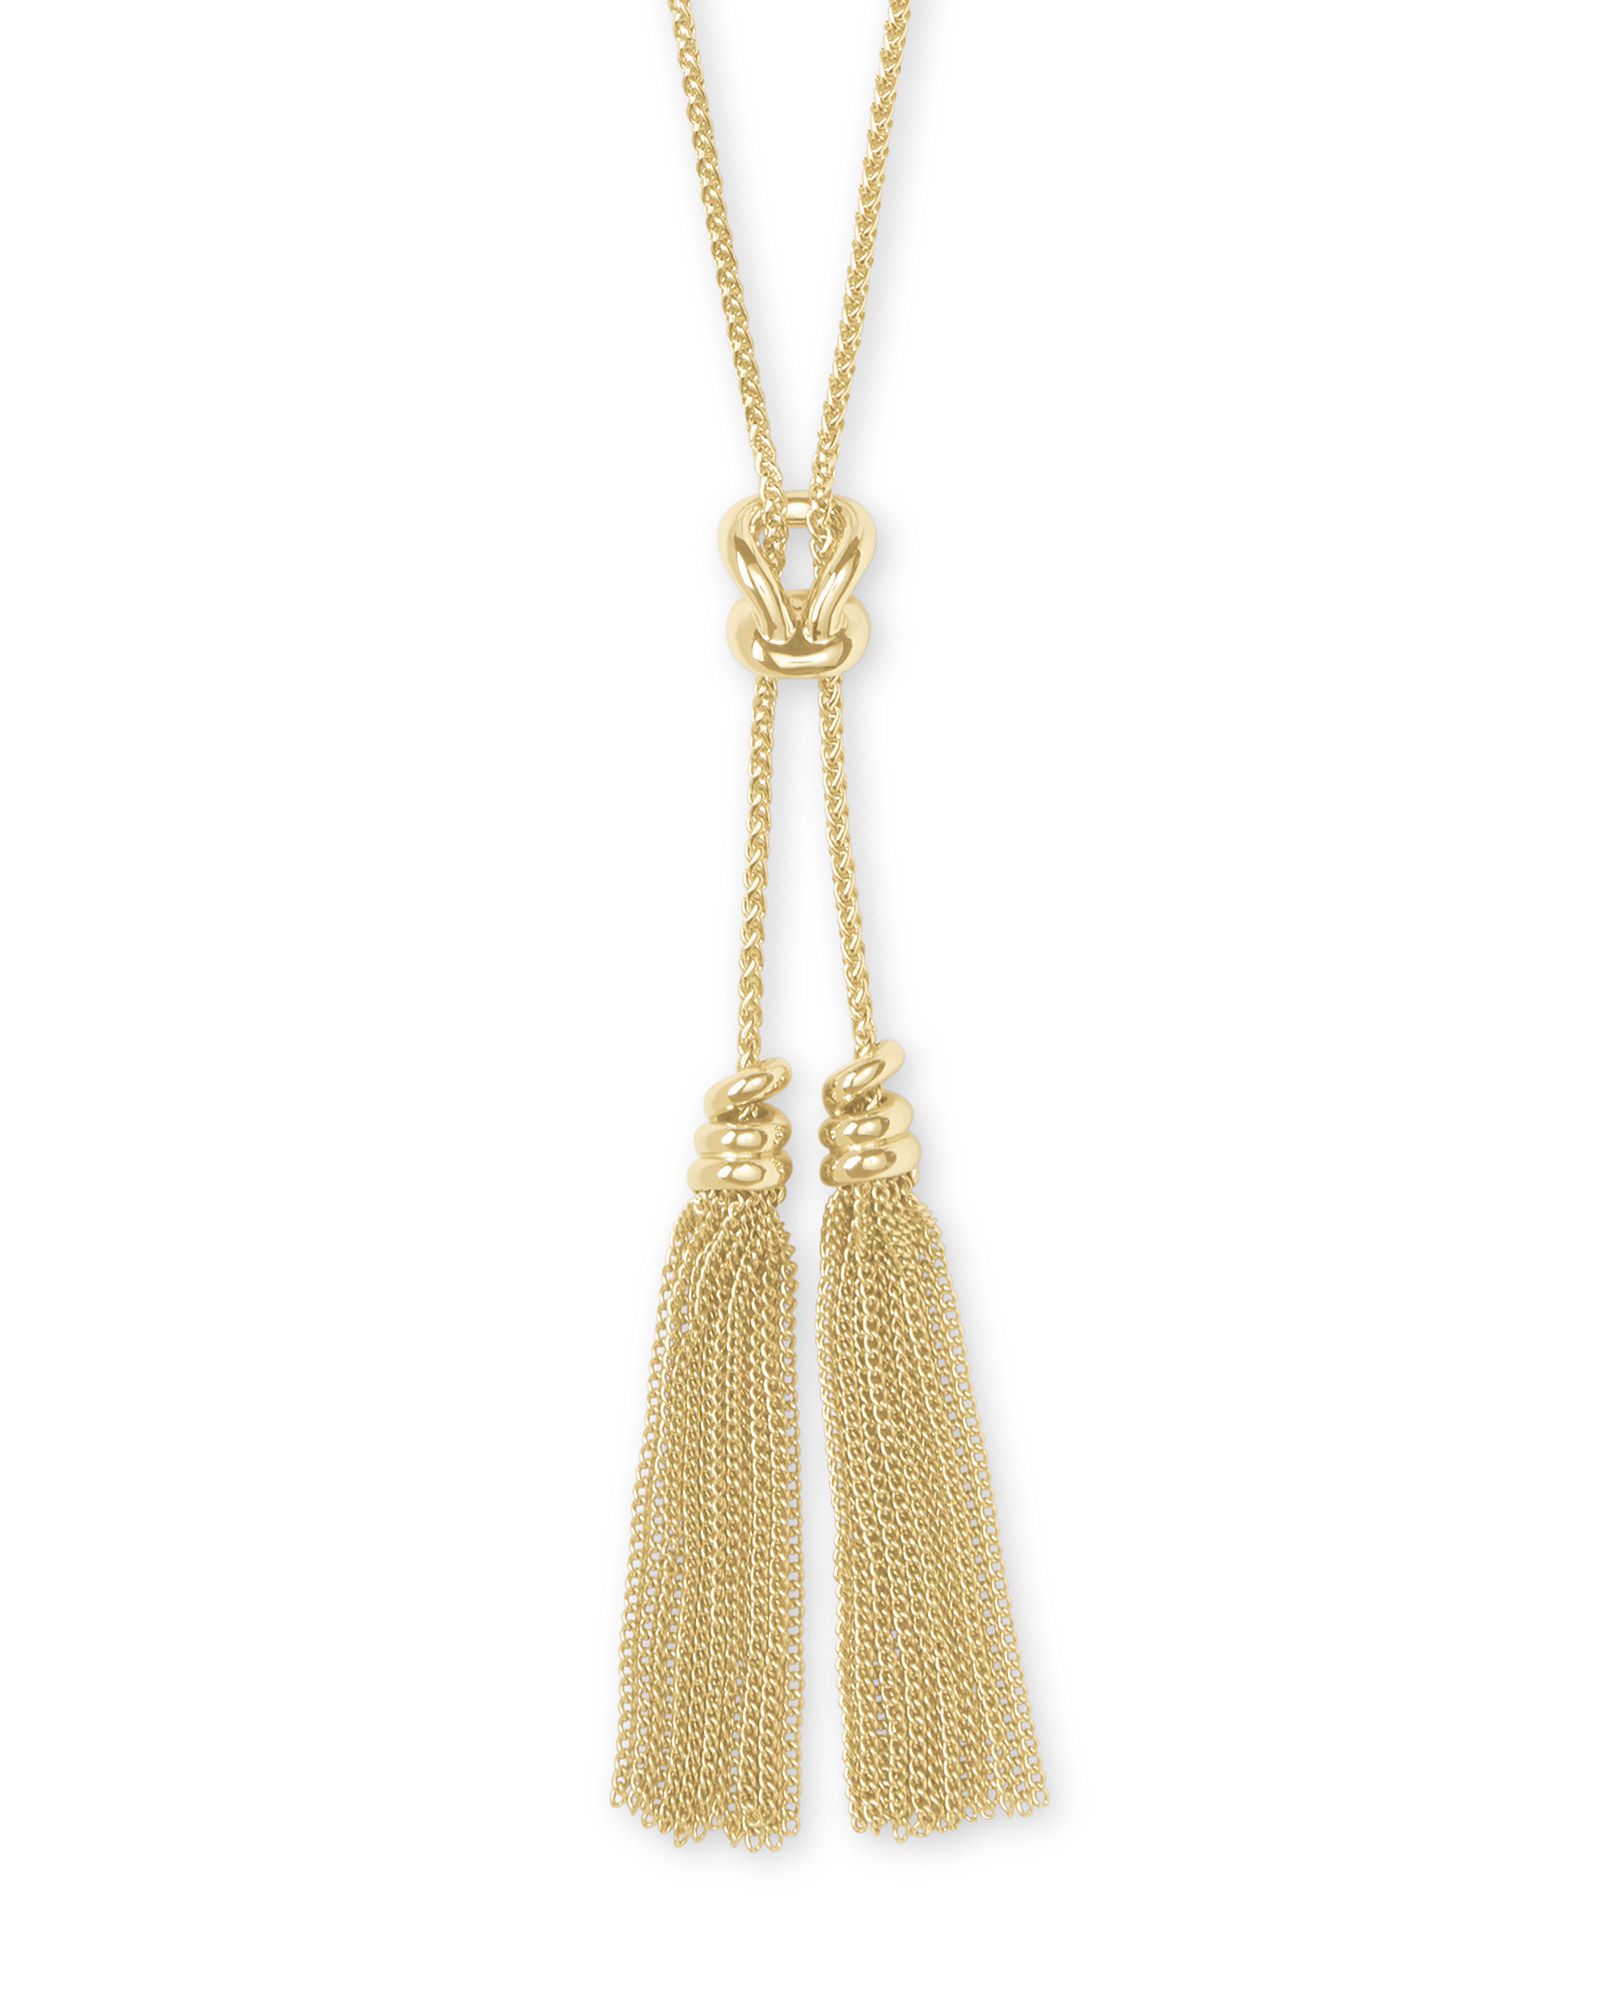 Presleigh Y Necklace in Gold | Kendra Scott